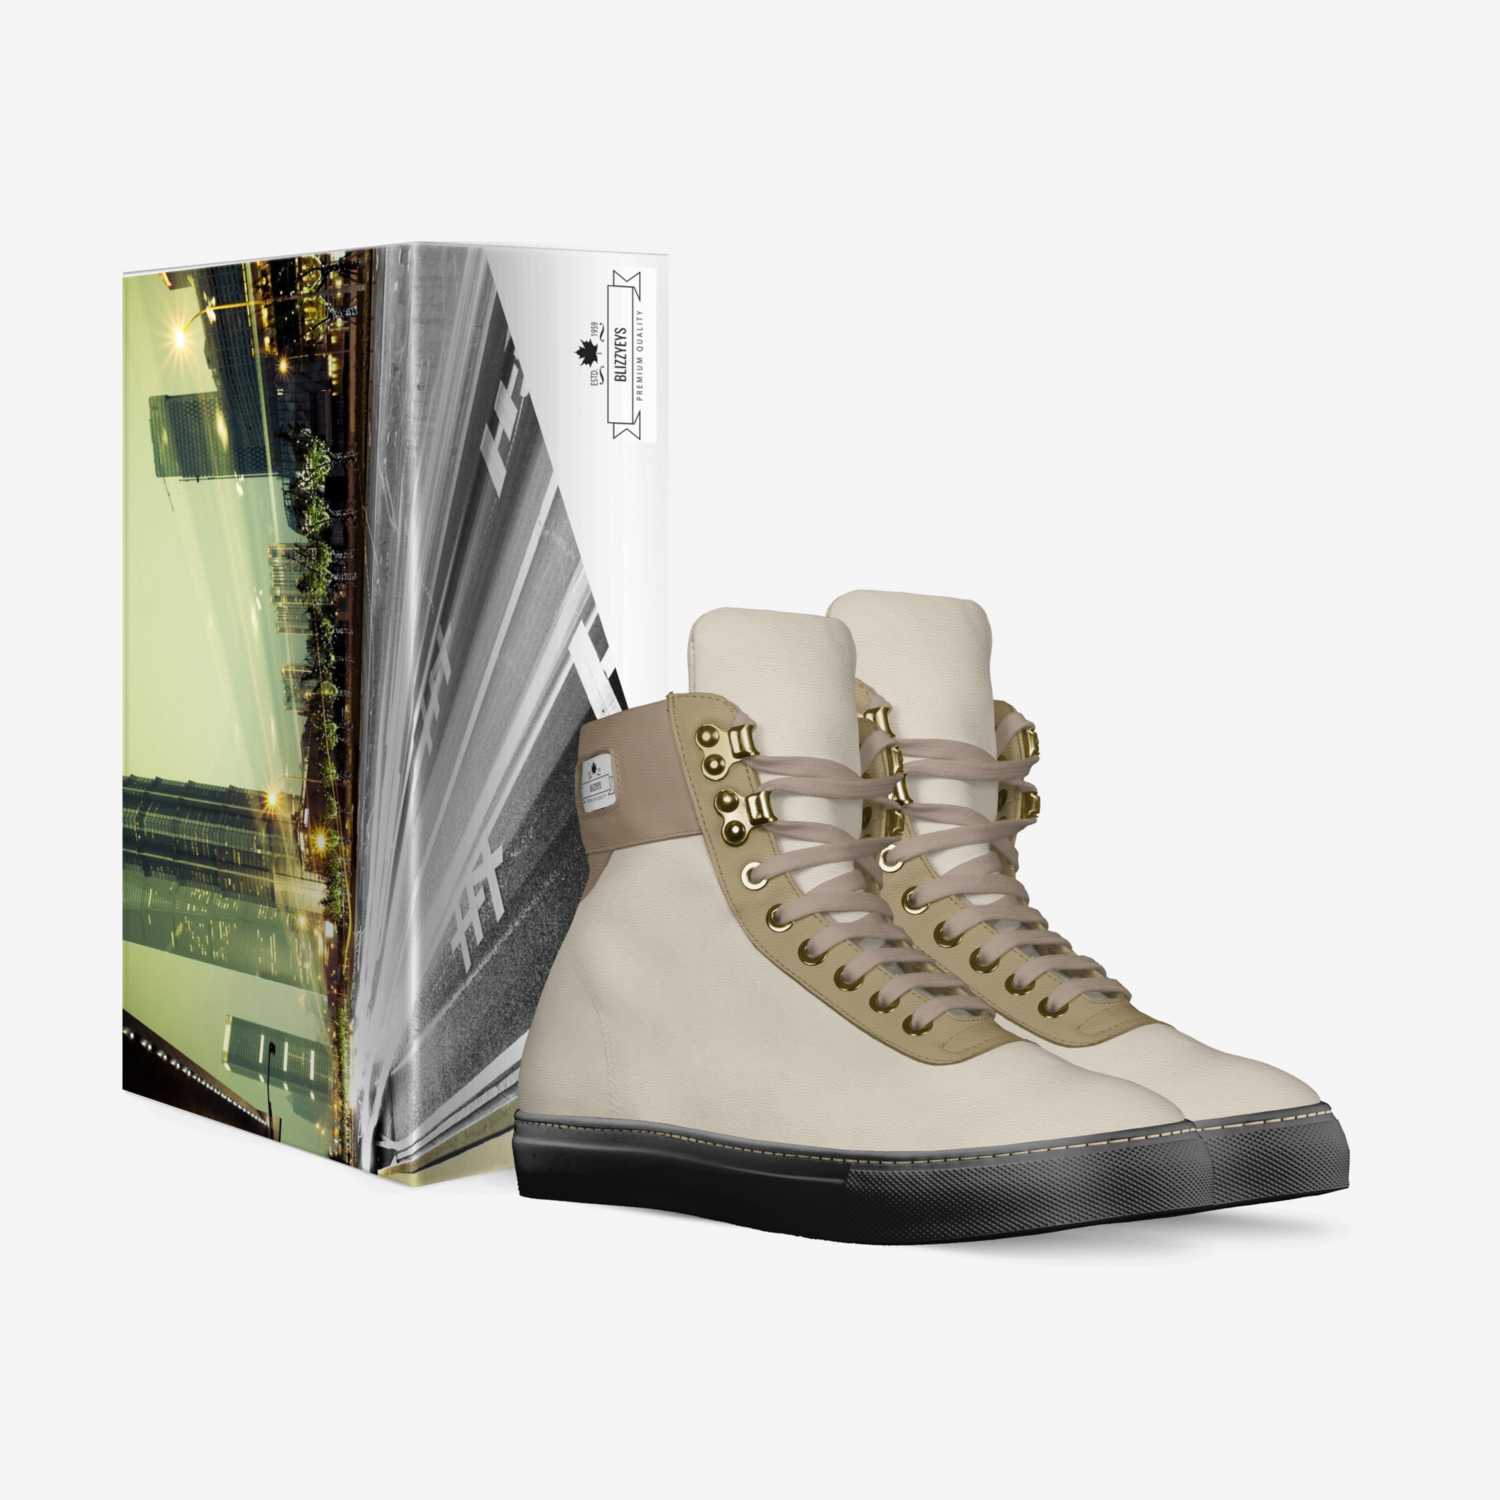 blizzyeys custom made in Italy shoes by Nikolaj Thorup | Box view